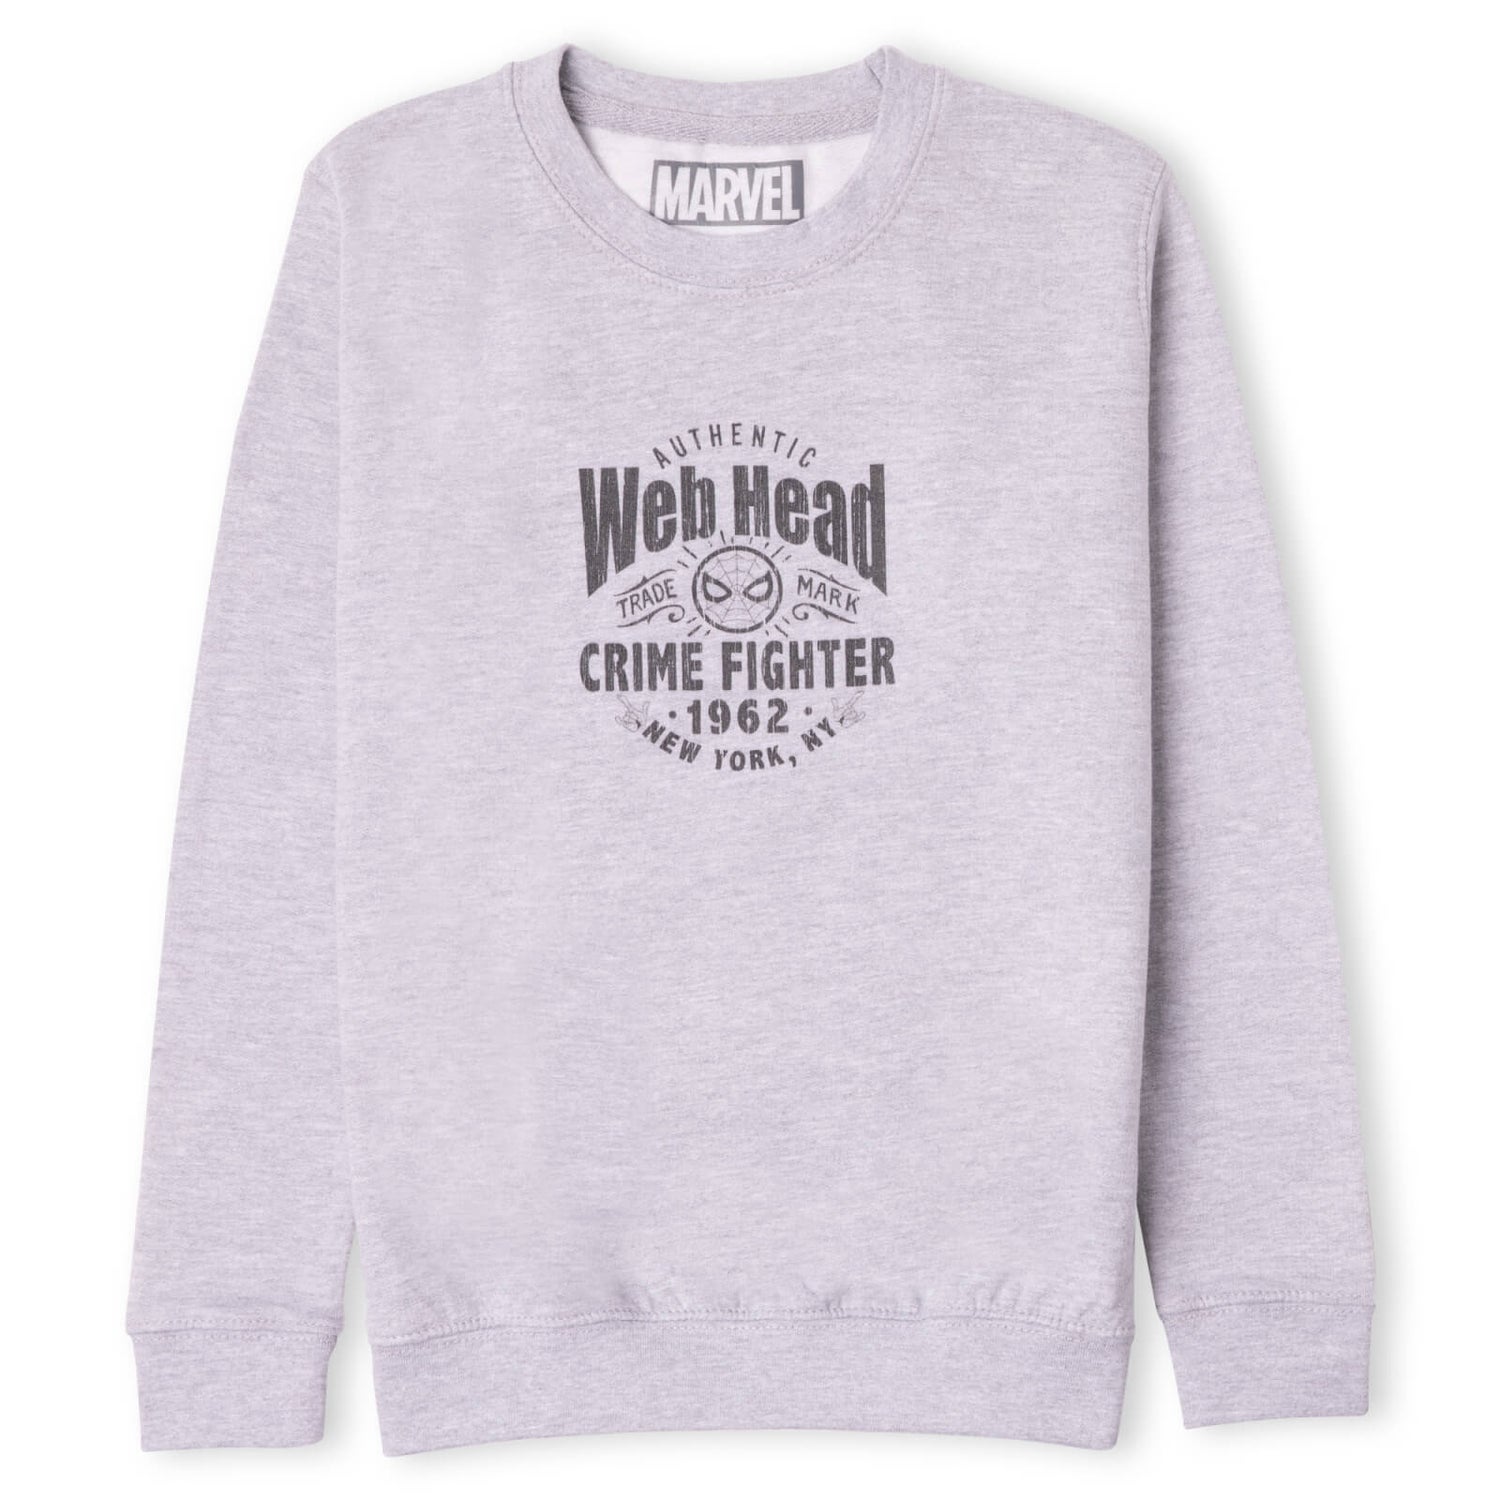 Marvel Web Head Crime Fighter Kids' Sweatshirt - Grey